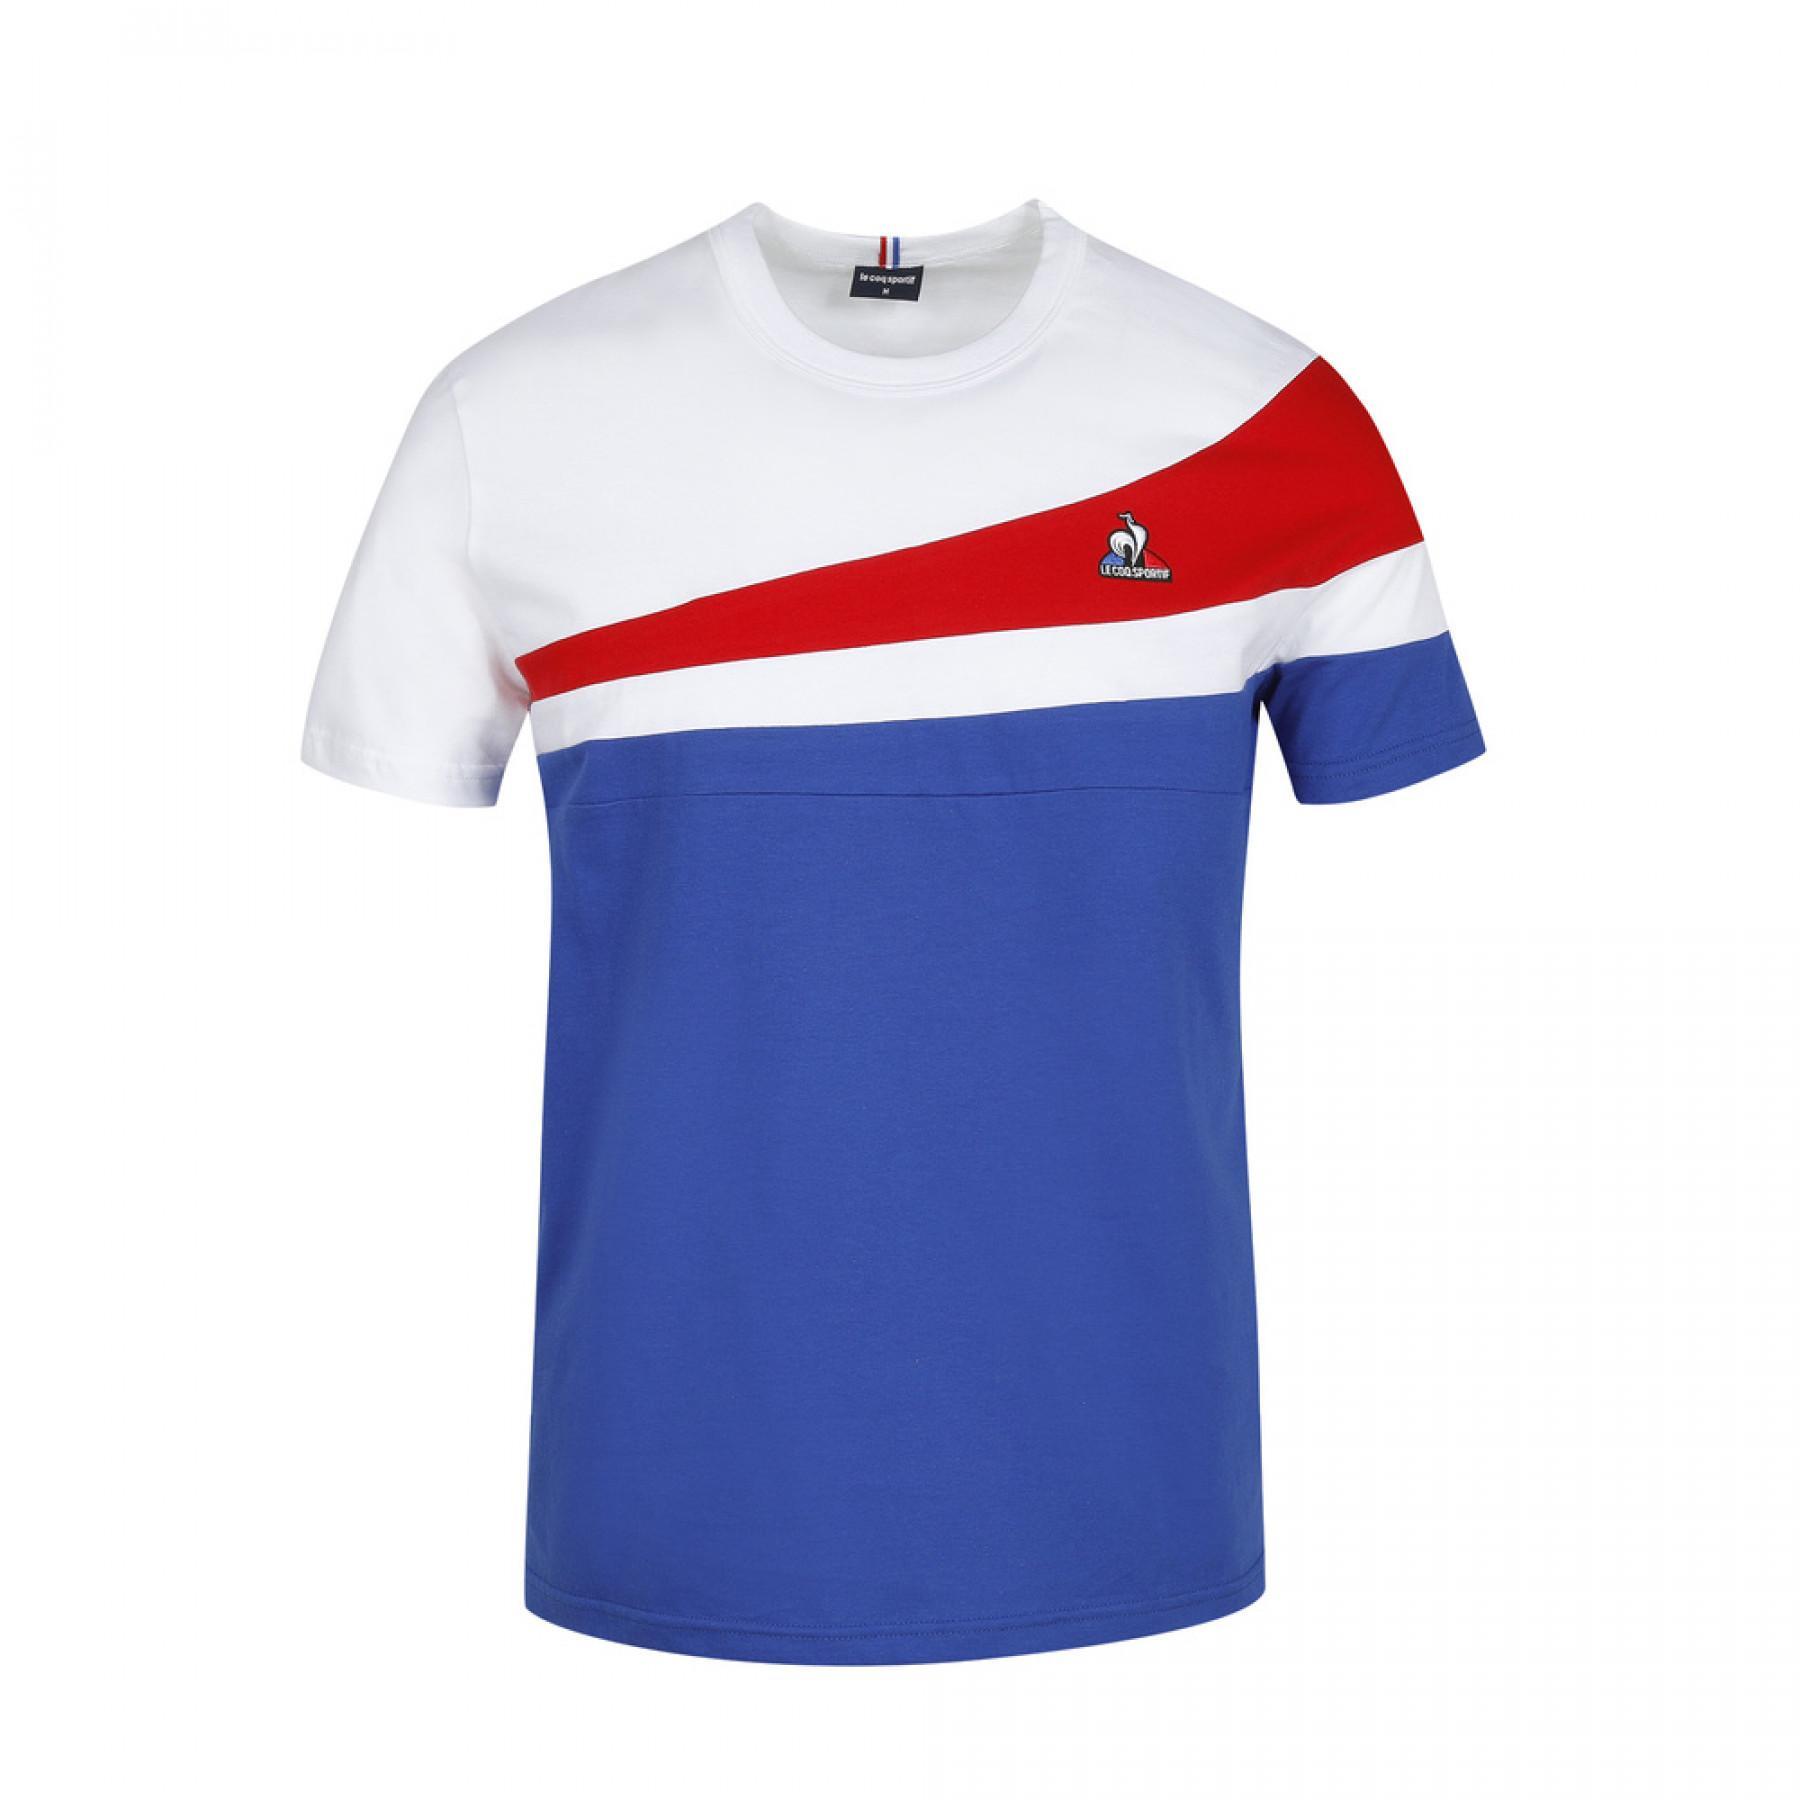 Camiseta Le Coq Sportif tricolor